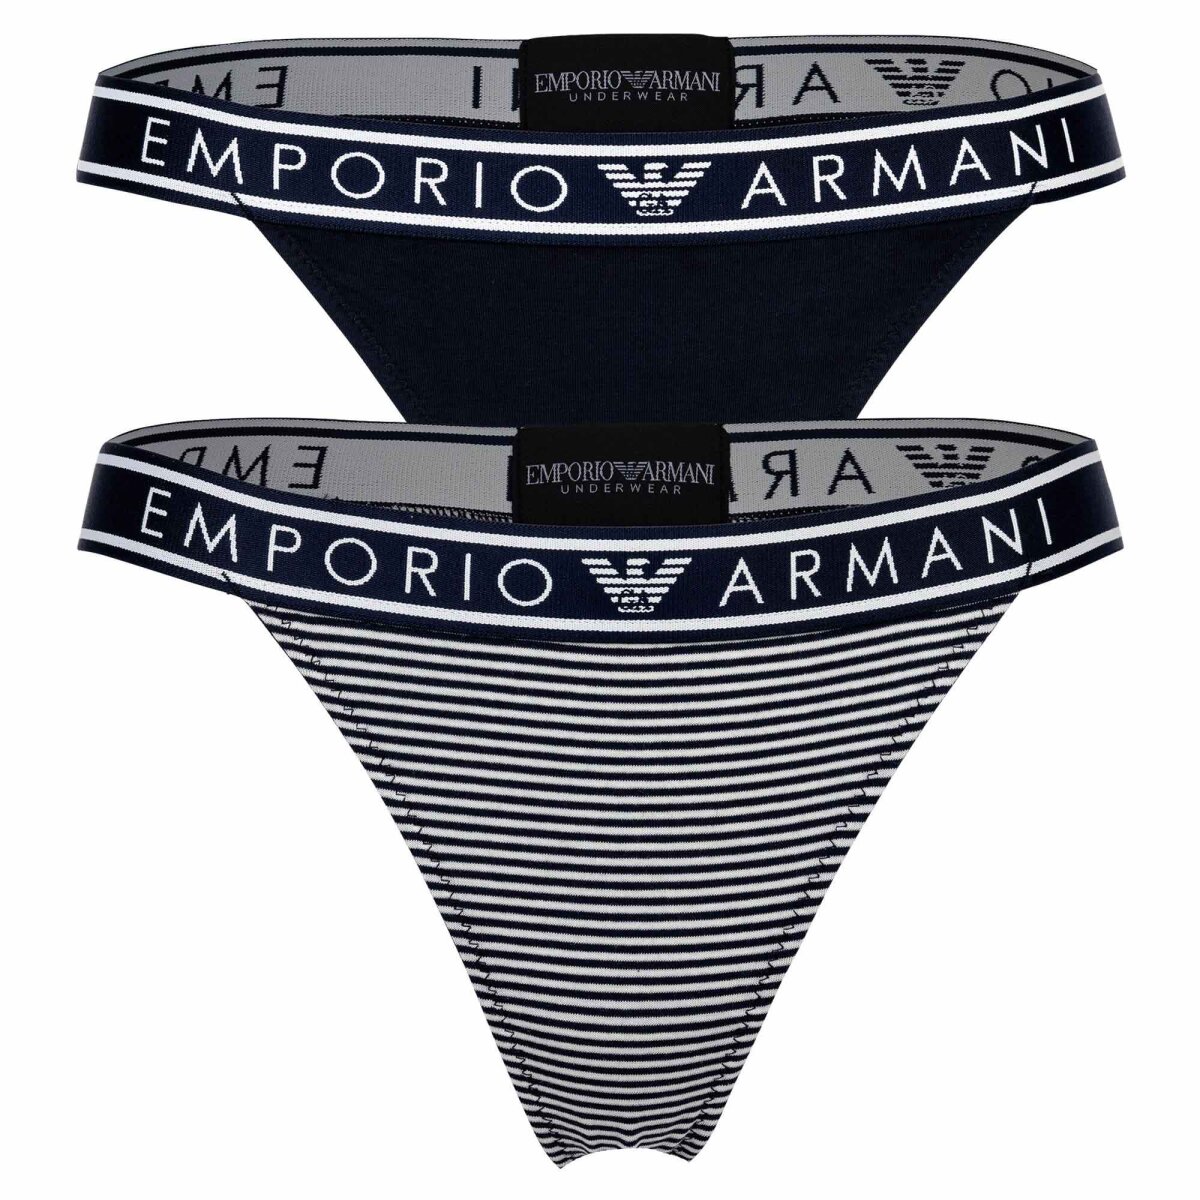 EMPORIO ARMANI Ladies Thongs, 2 Pack - PRINTED COTTON, 47,00 €